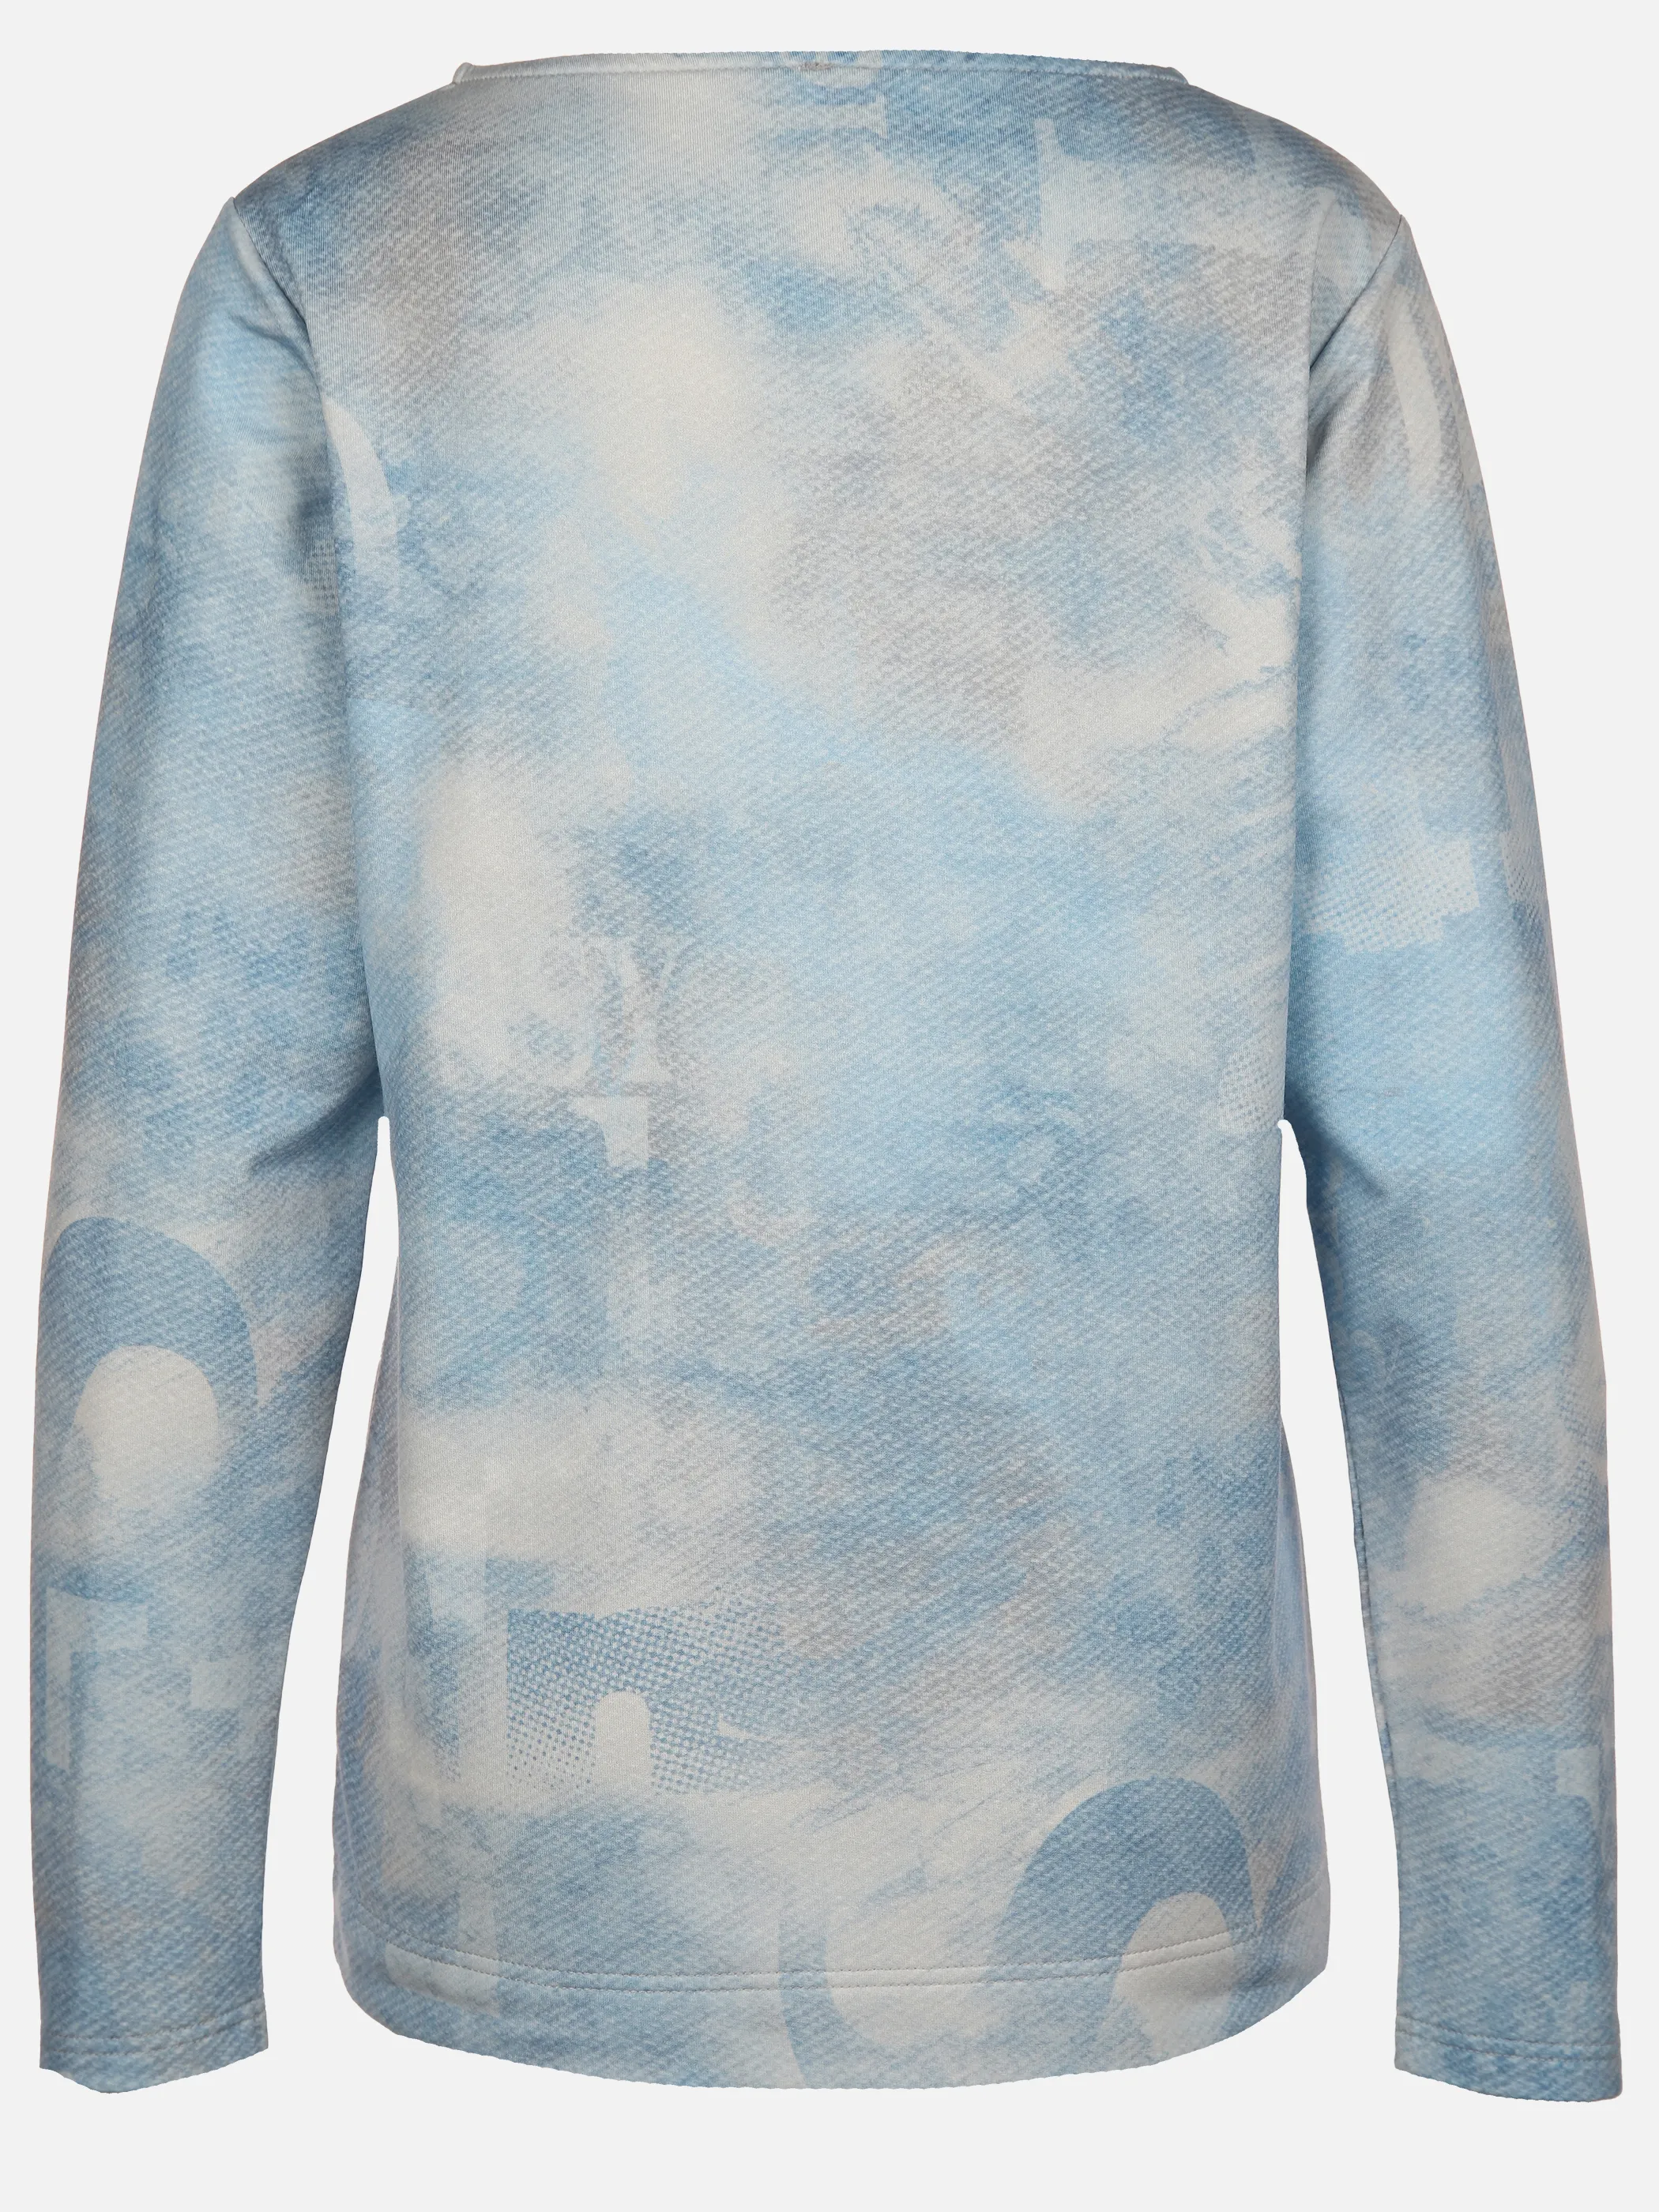 Lisa Tossa Da-Print-Shirt m. 1/1 Arm Blau 893302 MIDBLUE 2